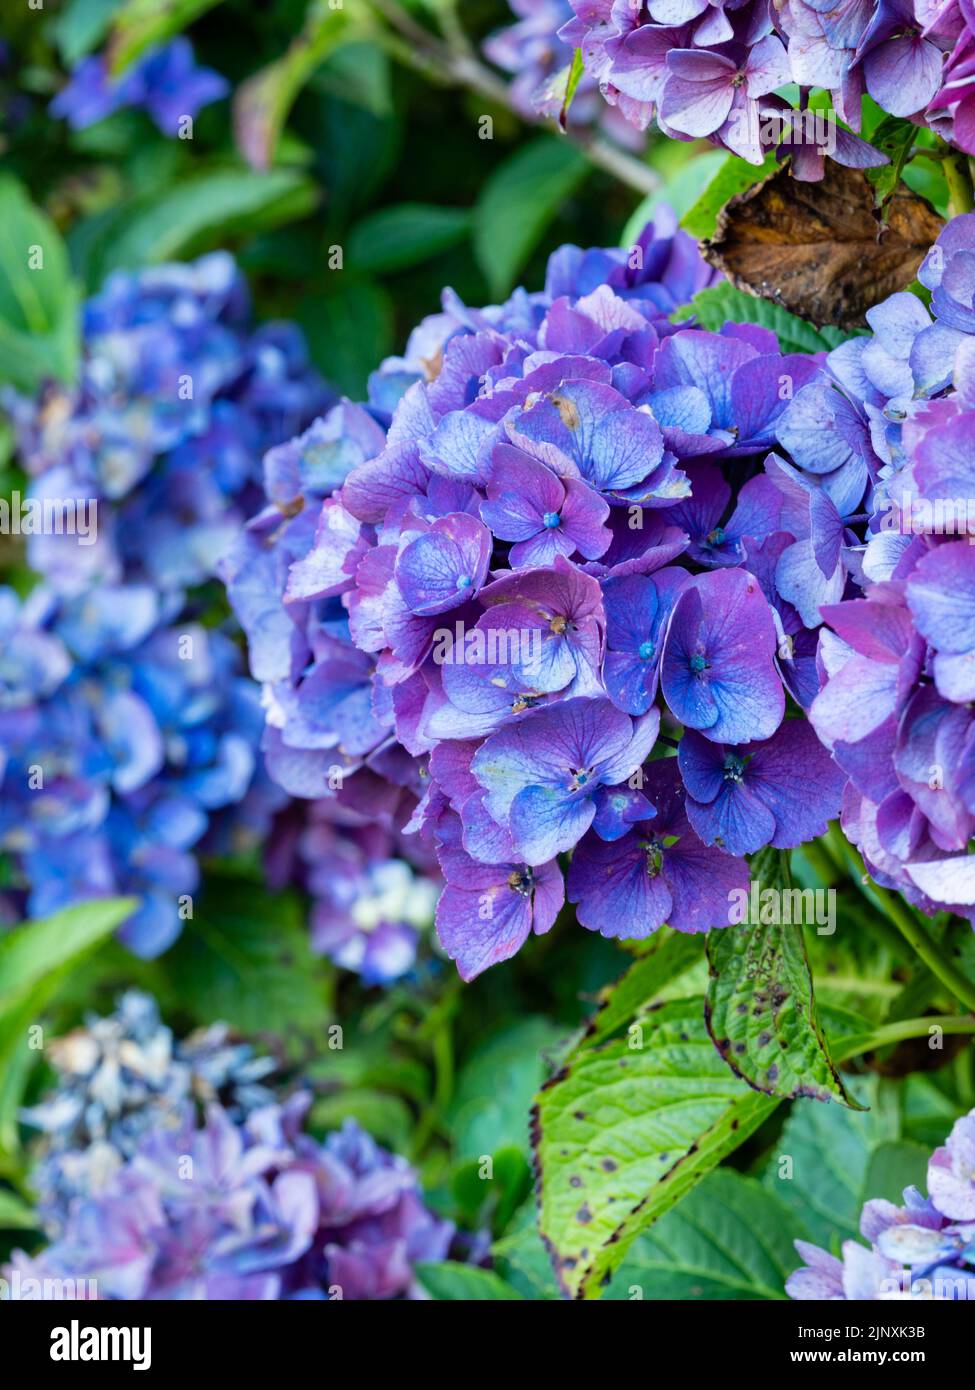 Violet-blue flowers of the hardy mophead hydrangea, Hydrangea macrophylla 'Pia' Stock Photo